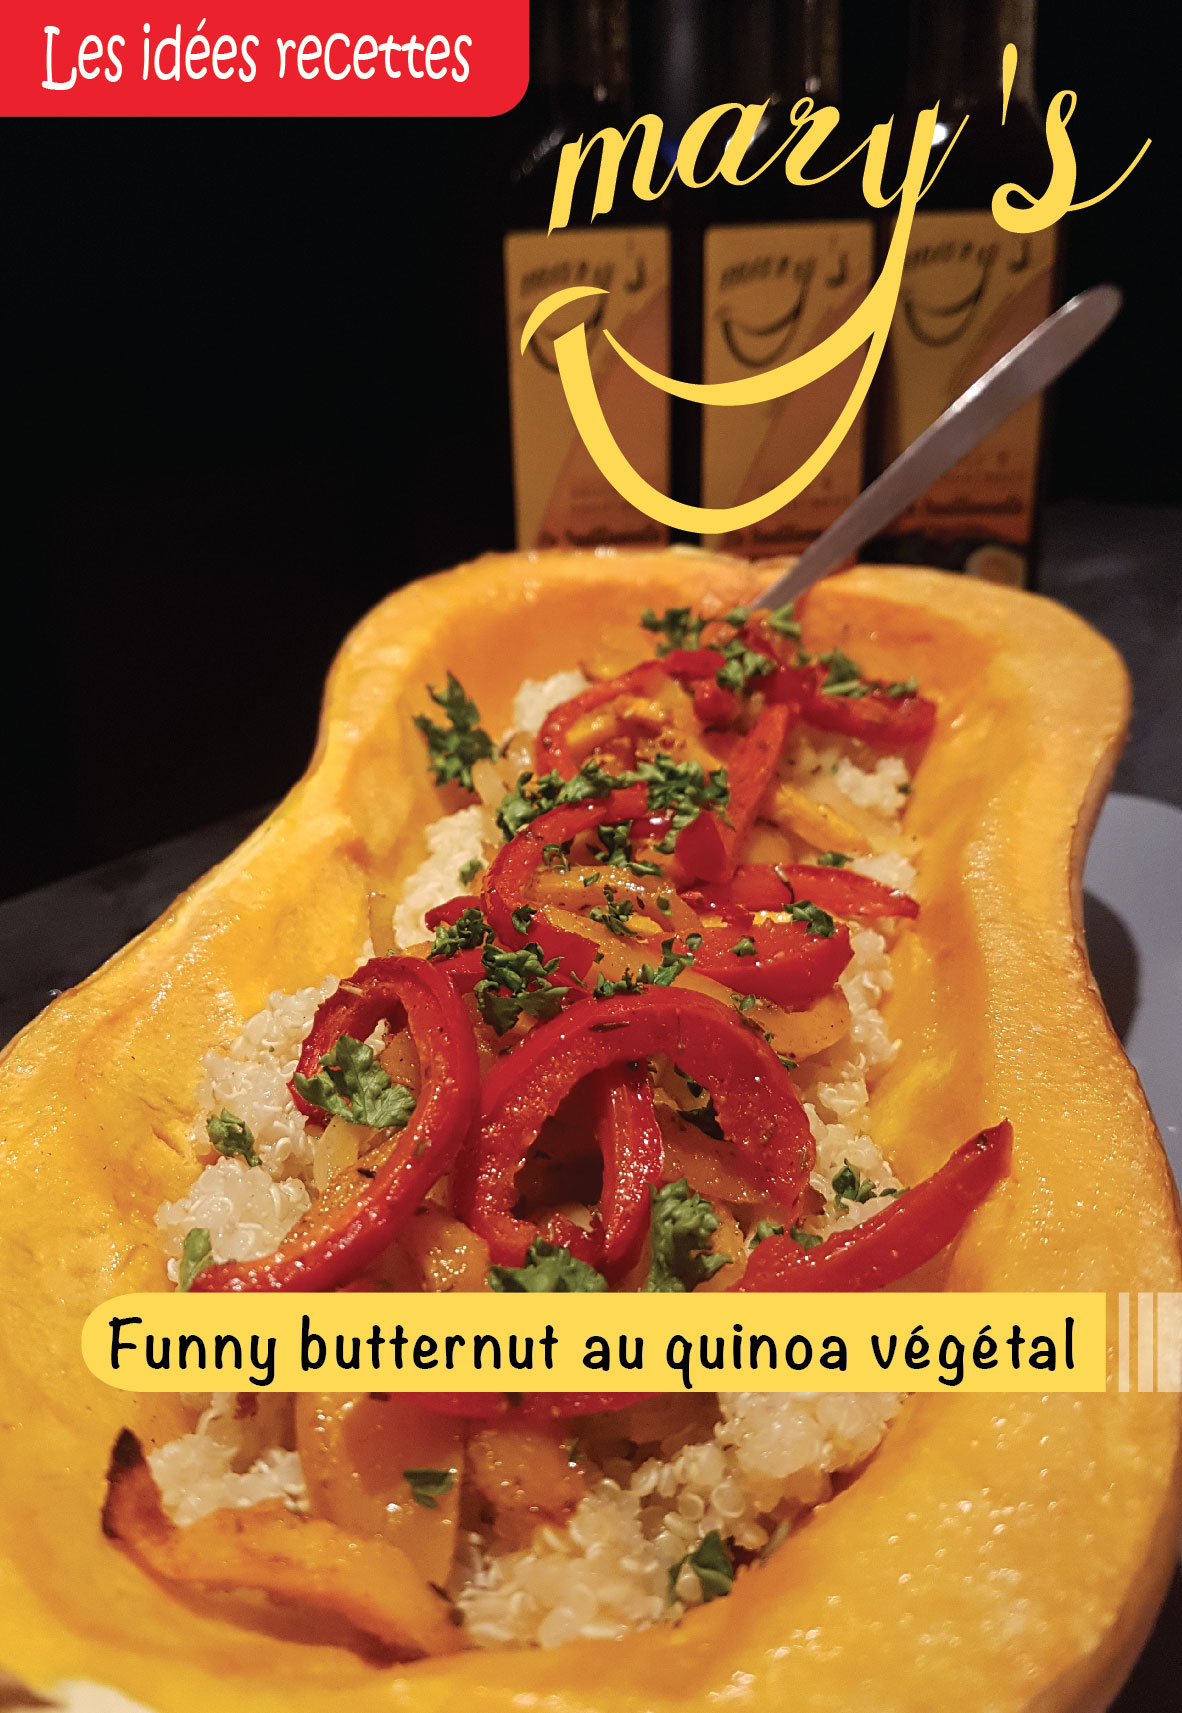 Funny butternut au quinoa végétal